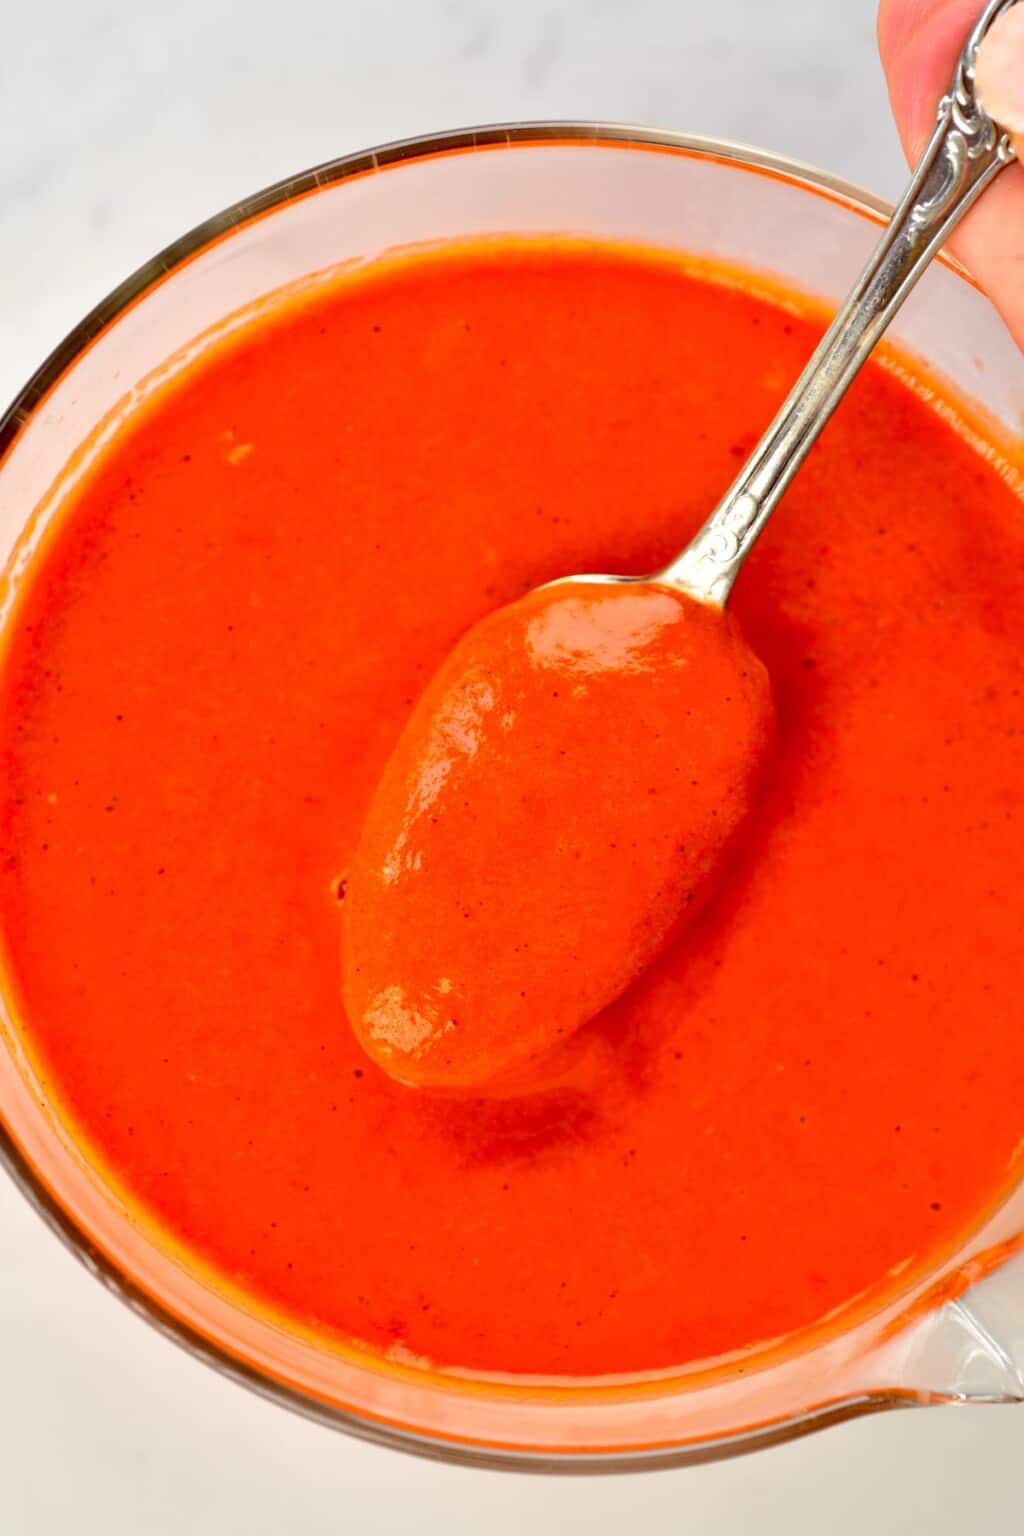 Creamy Roasted Red Pepper Sauce (Vegan, GF| Pasta sauce, Dip, Spread)